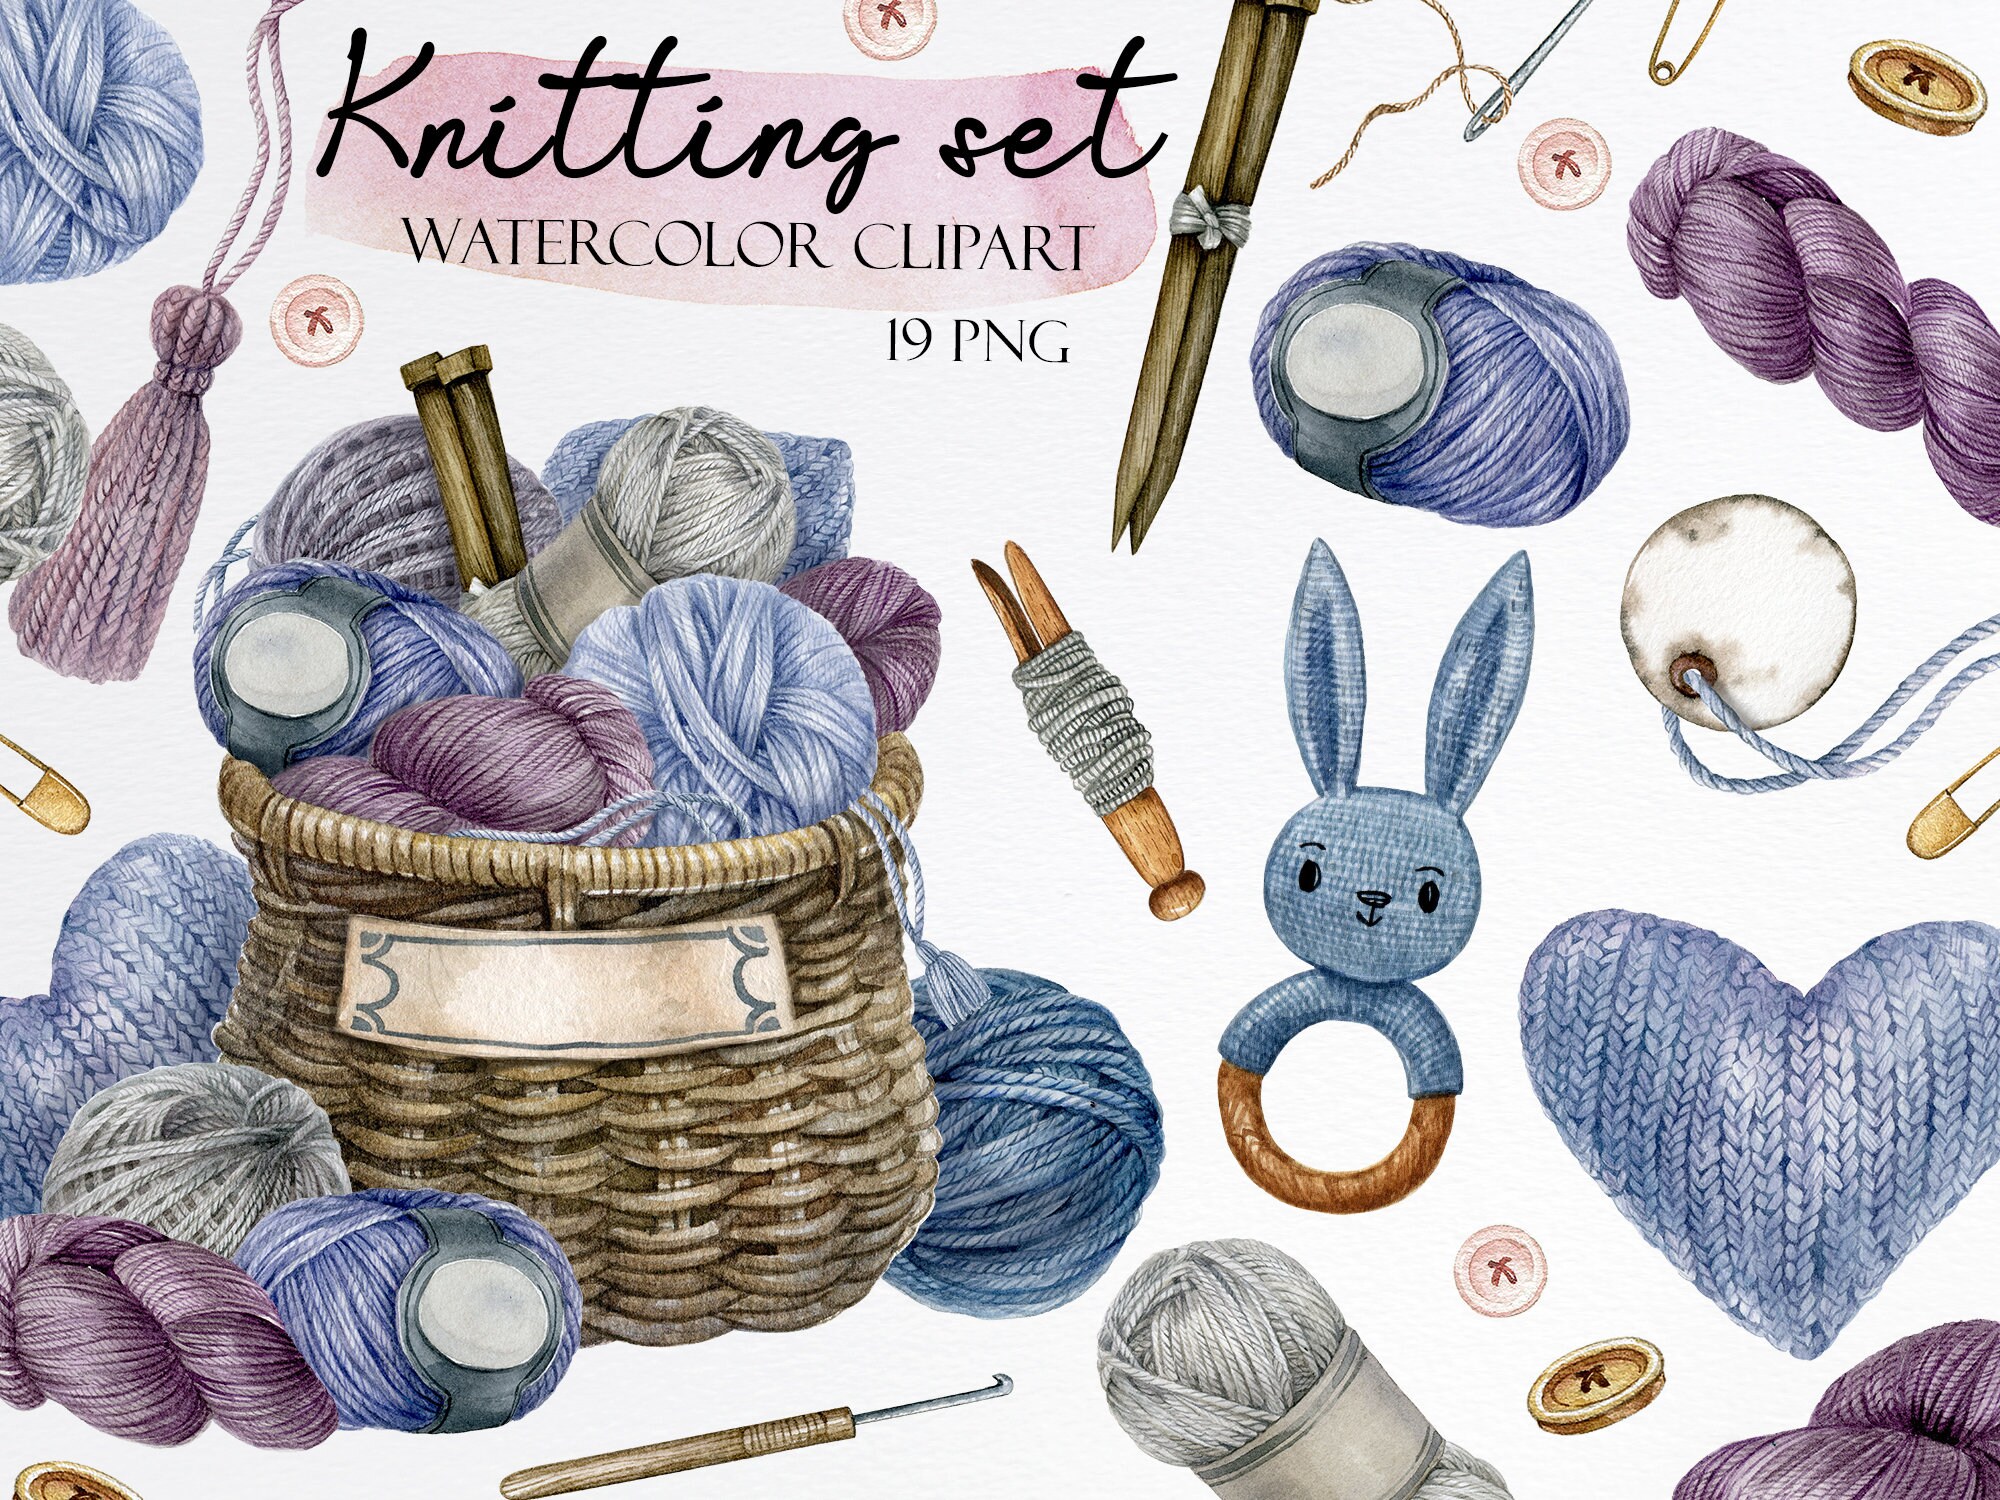 Watercolor Knitting and Crocheting tools set. Wooden Knitting